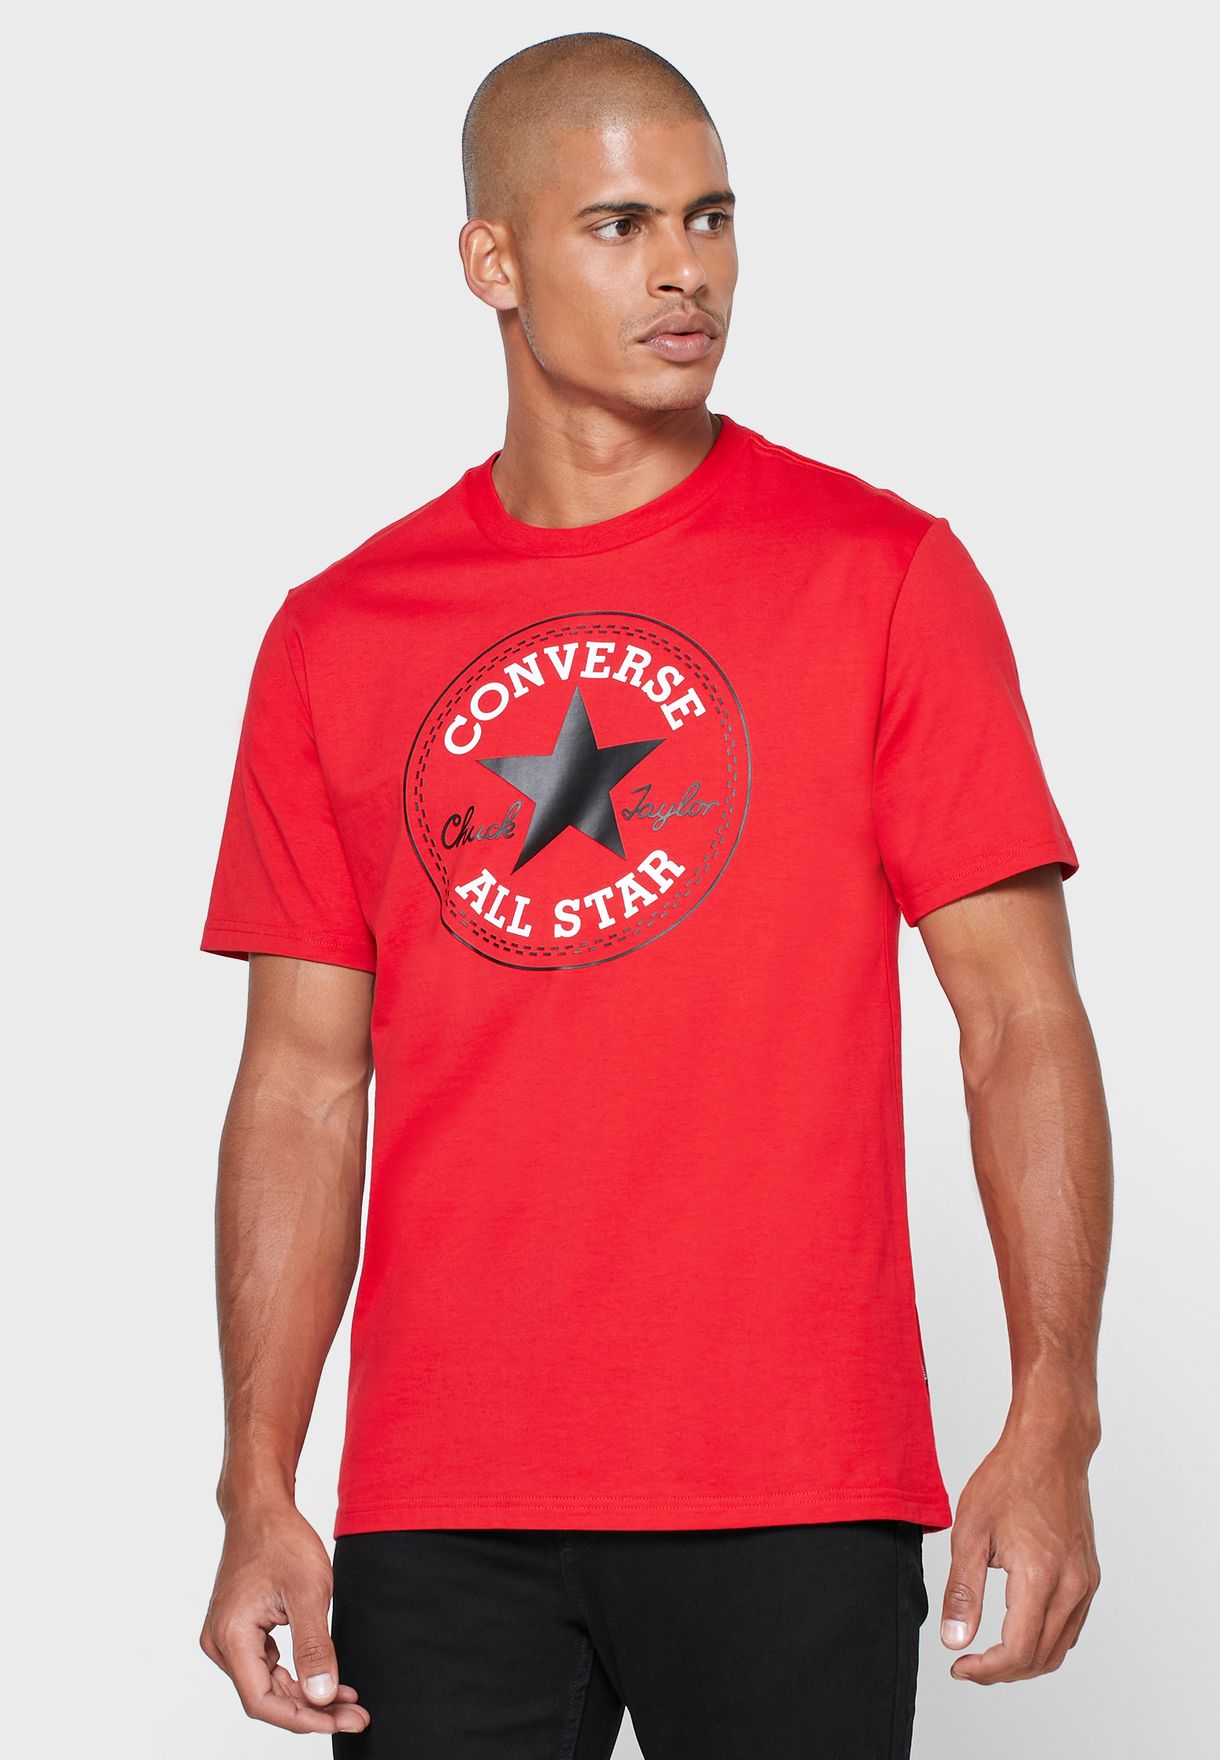 red converse t shirt